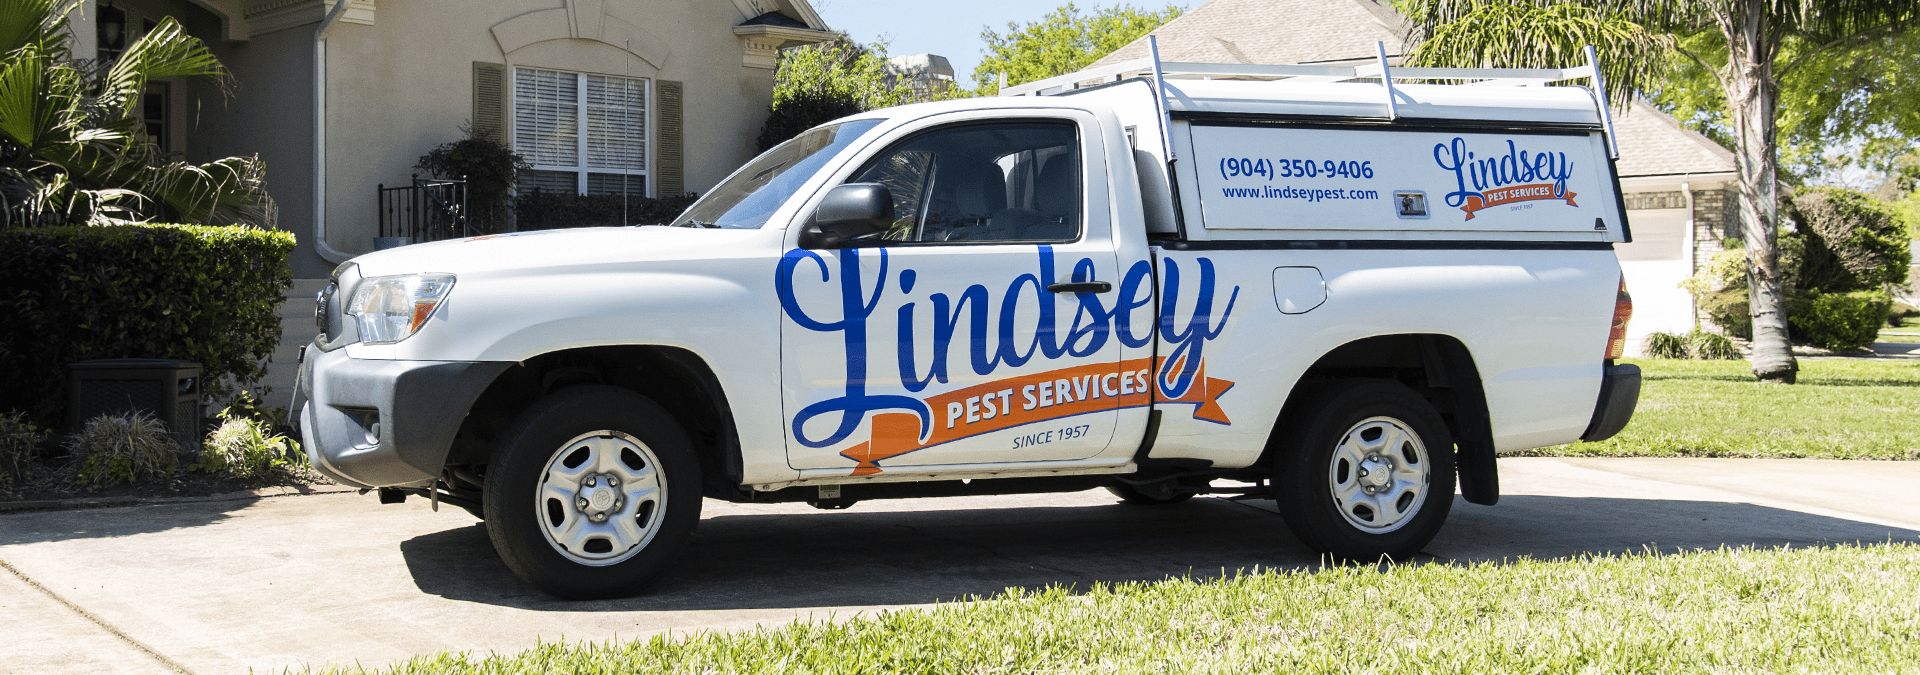 lindsey pest services truck